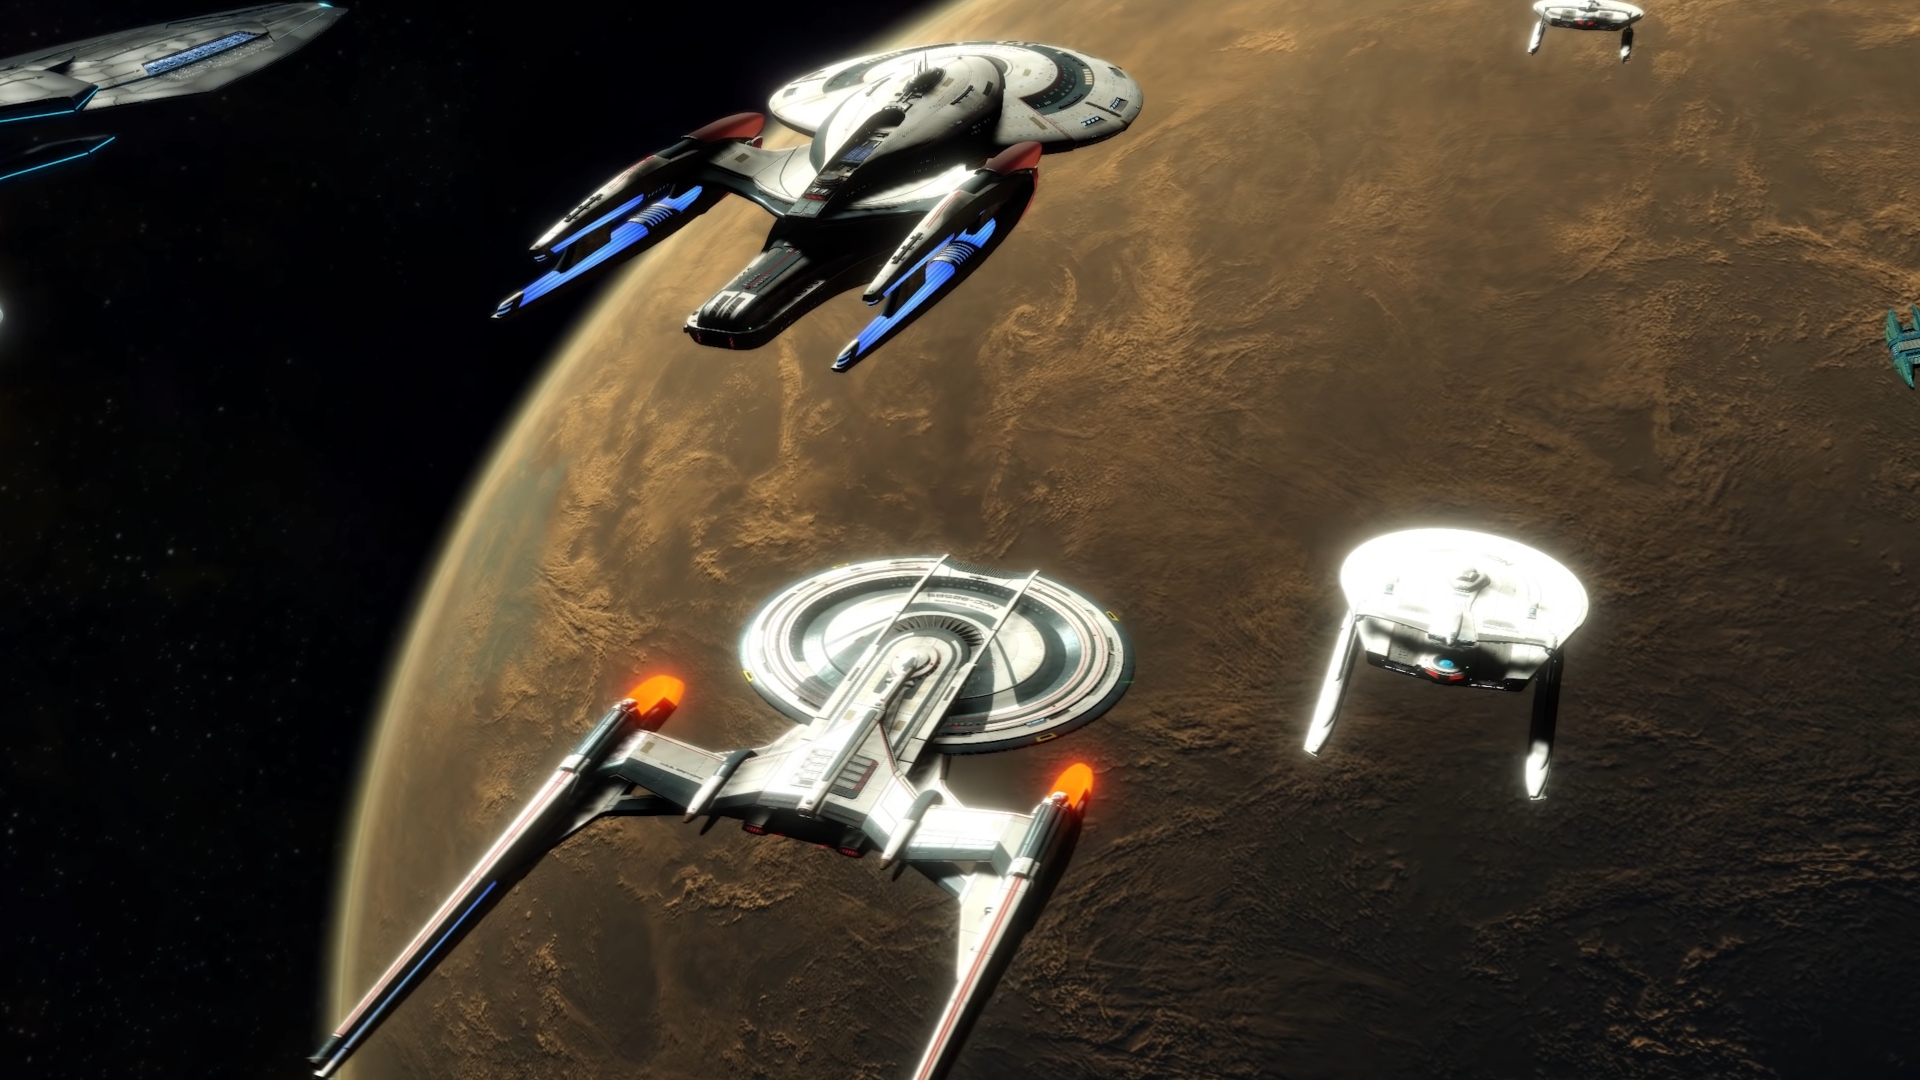 Lot of 5 Metal Earth Sci-Fi Space Ship Models Star Wars/Star Trek/Mass Effect 